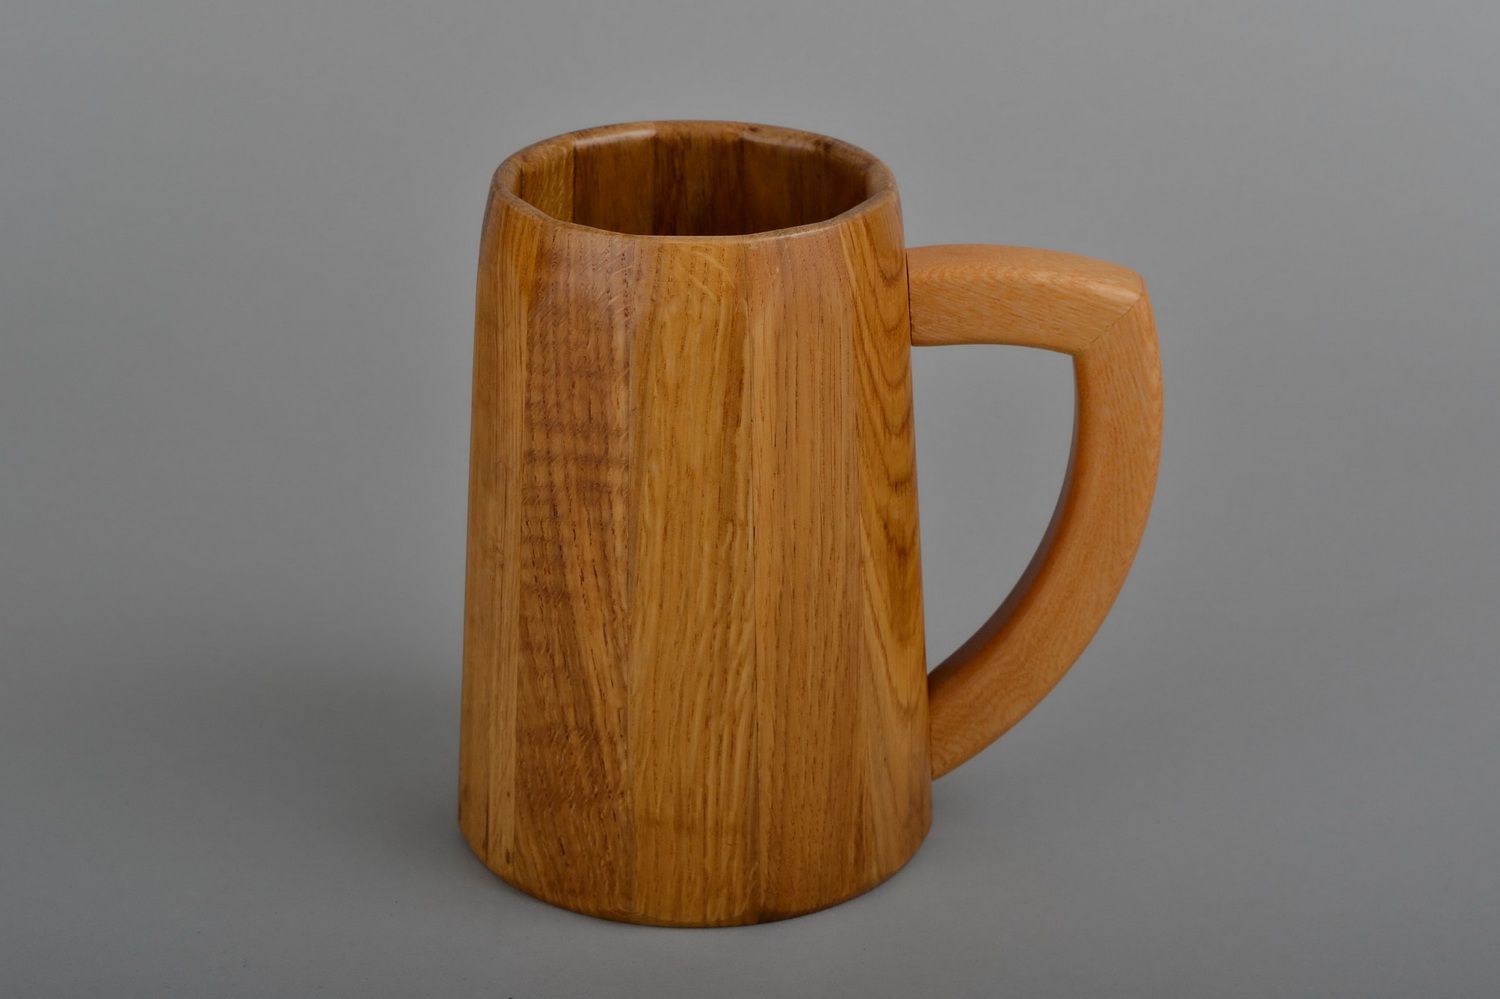 Beer mug made of wood